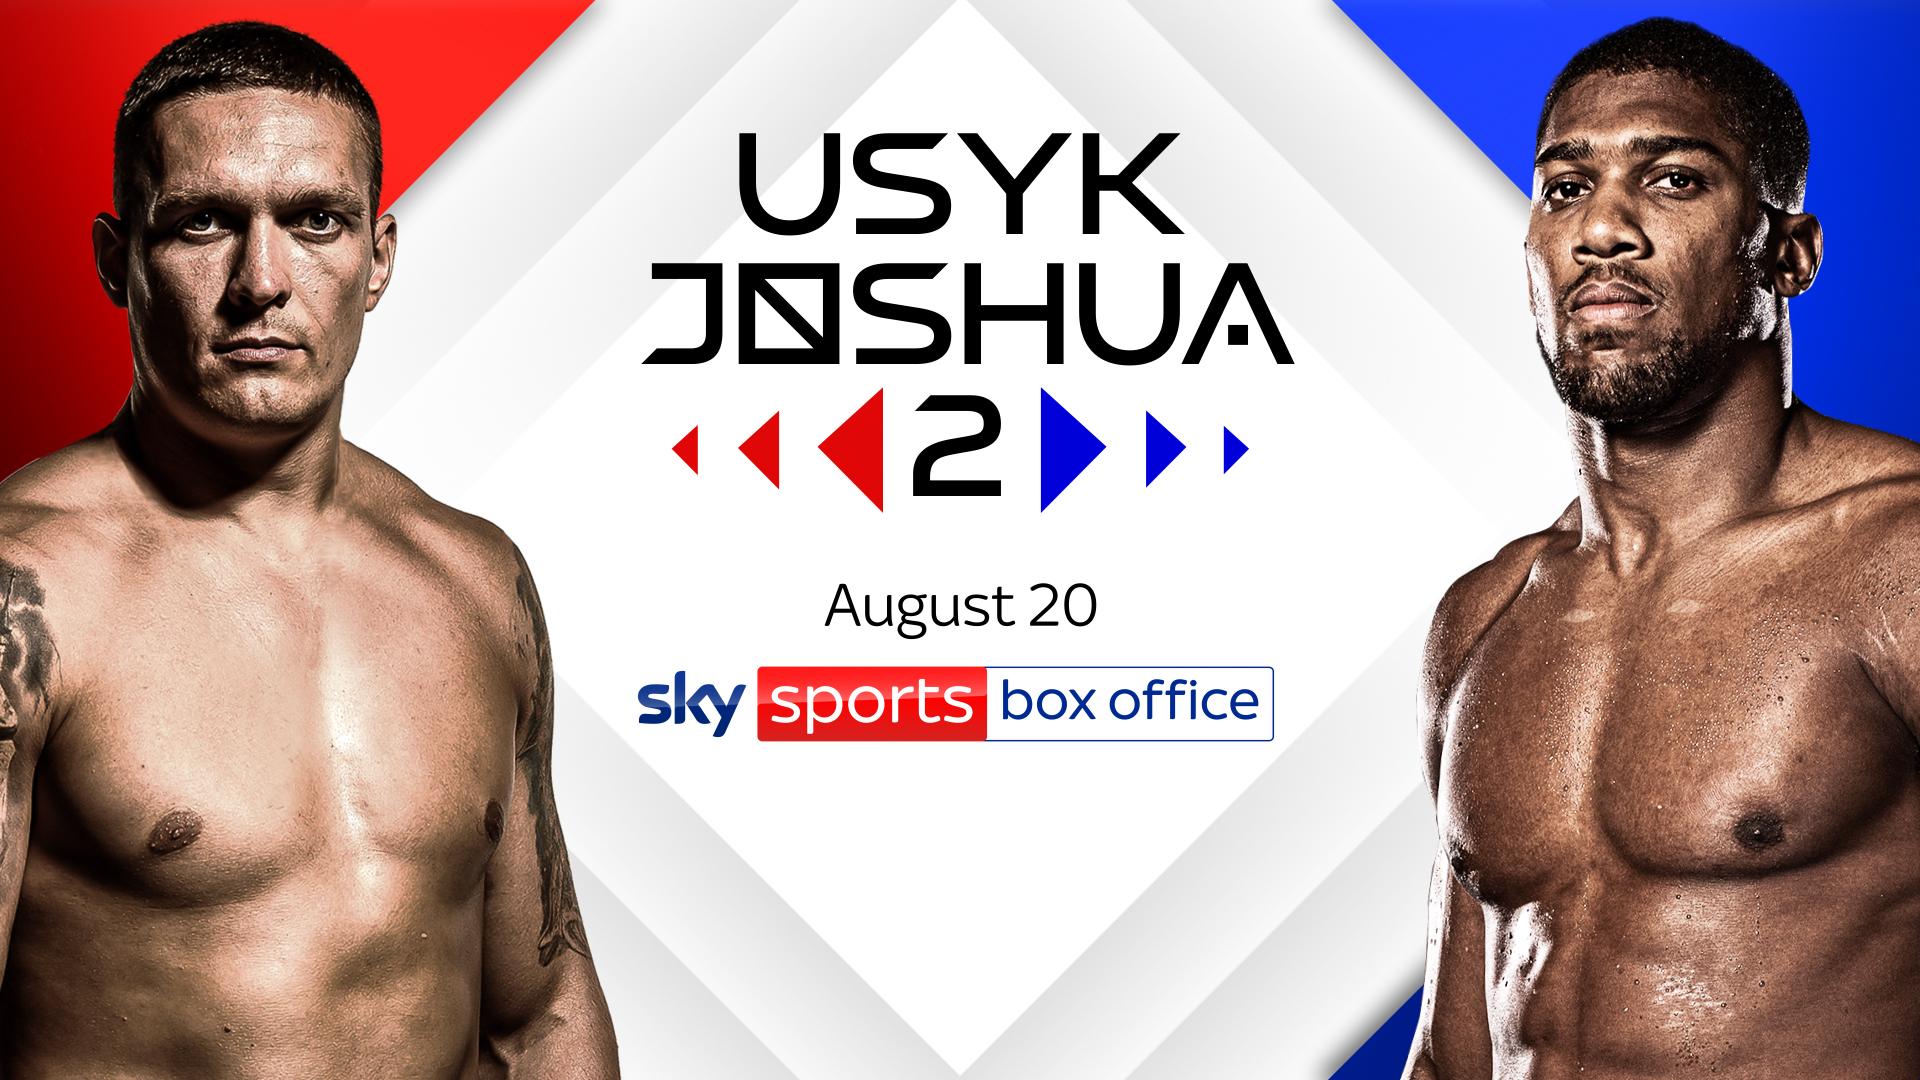 Sky Sport Box Office to broadcast Usyk/Joshua rematch